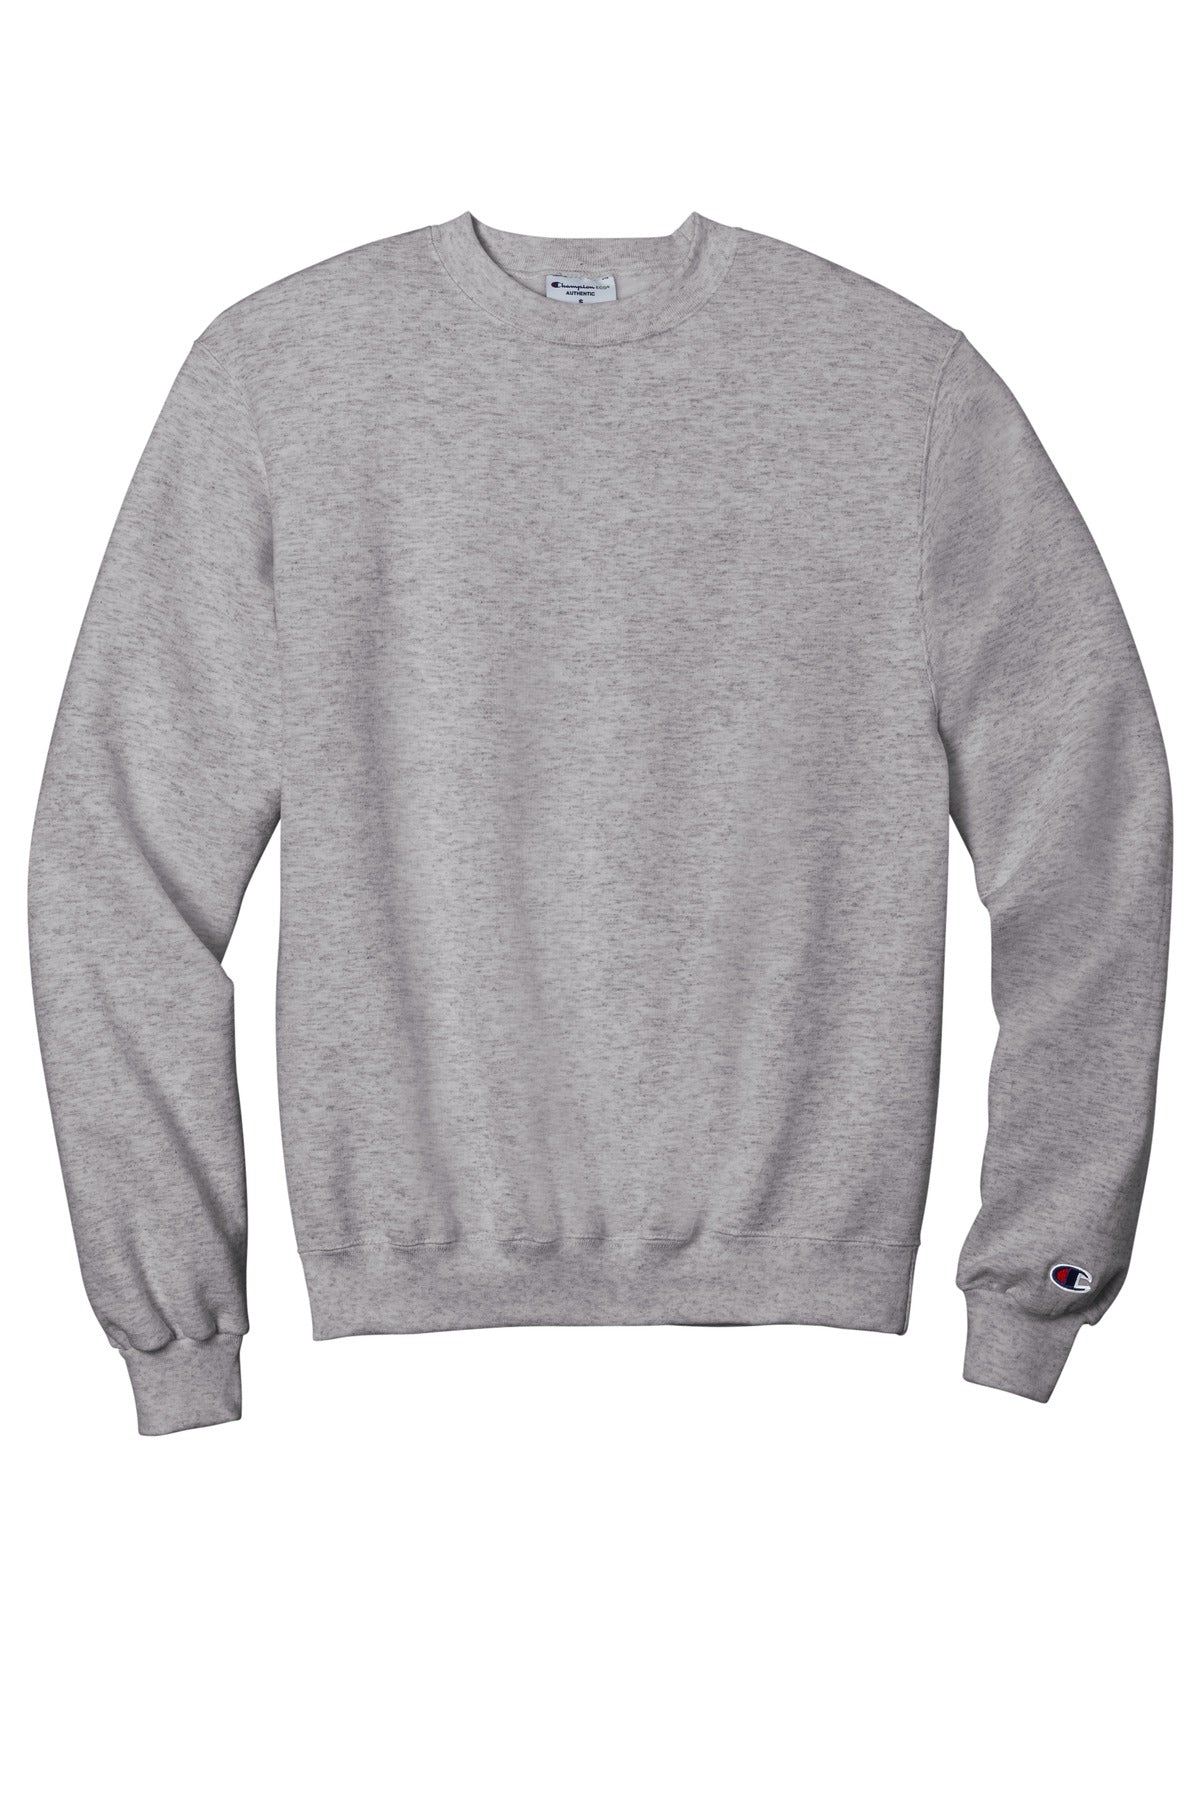 Champion Powerblend Crewneck Sweatshirt. S6000 - BT Imprintables Shirts